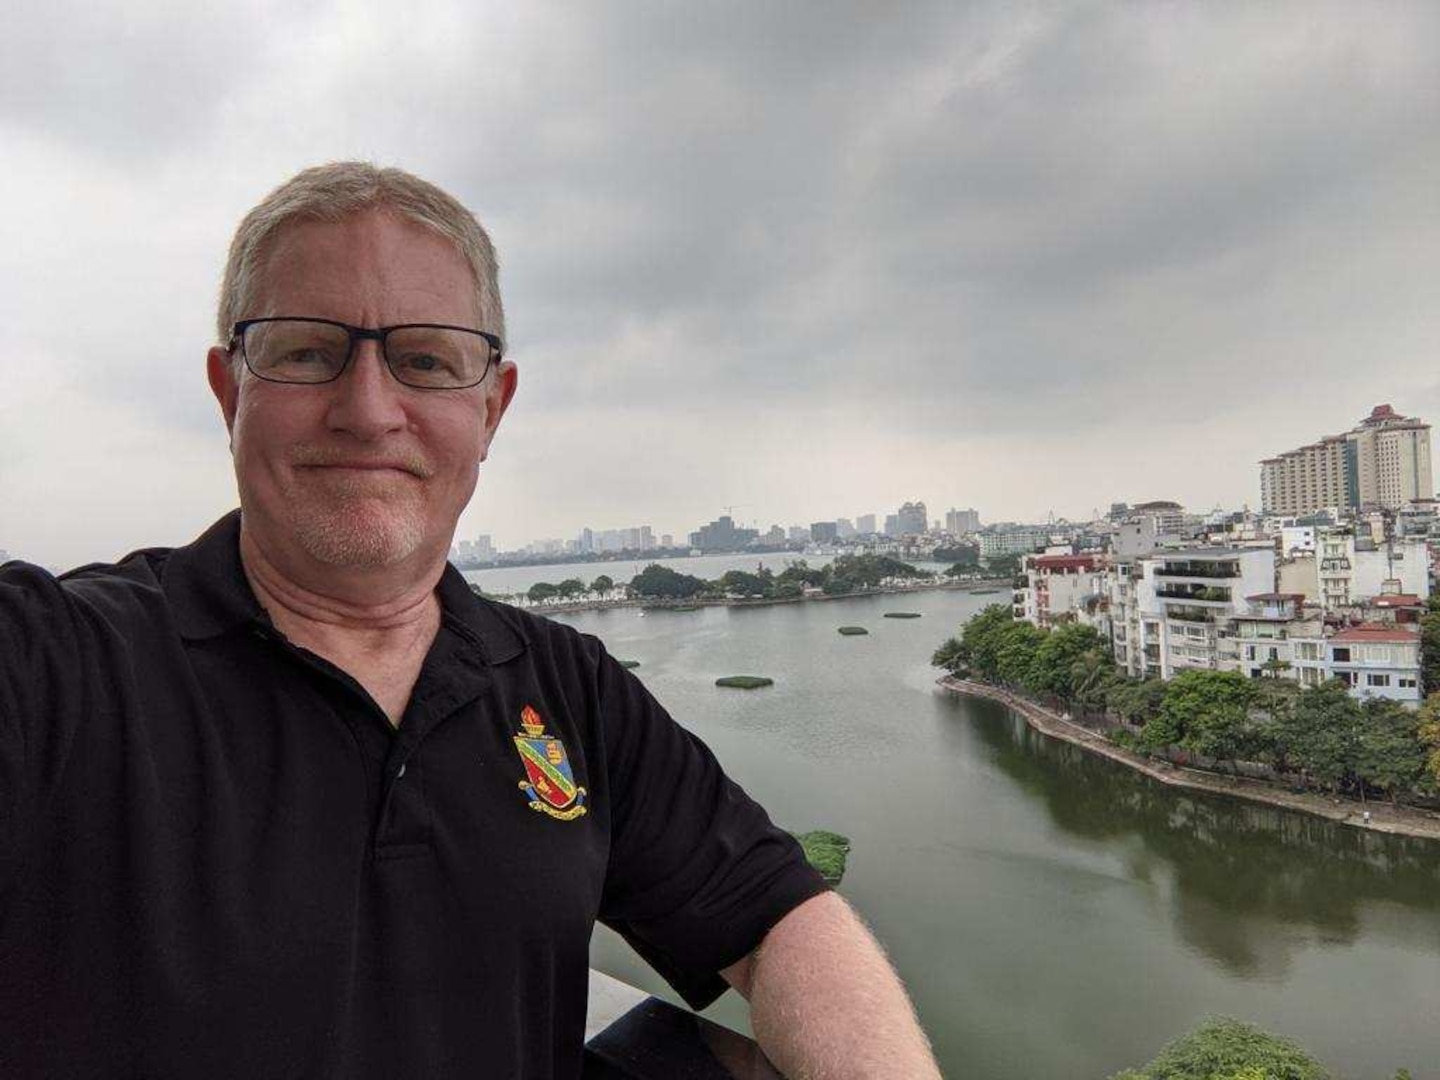 DLIELC instructor Phil Reed shown in scenic photo in Hanoi, Vietnam.